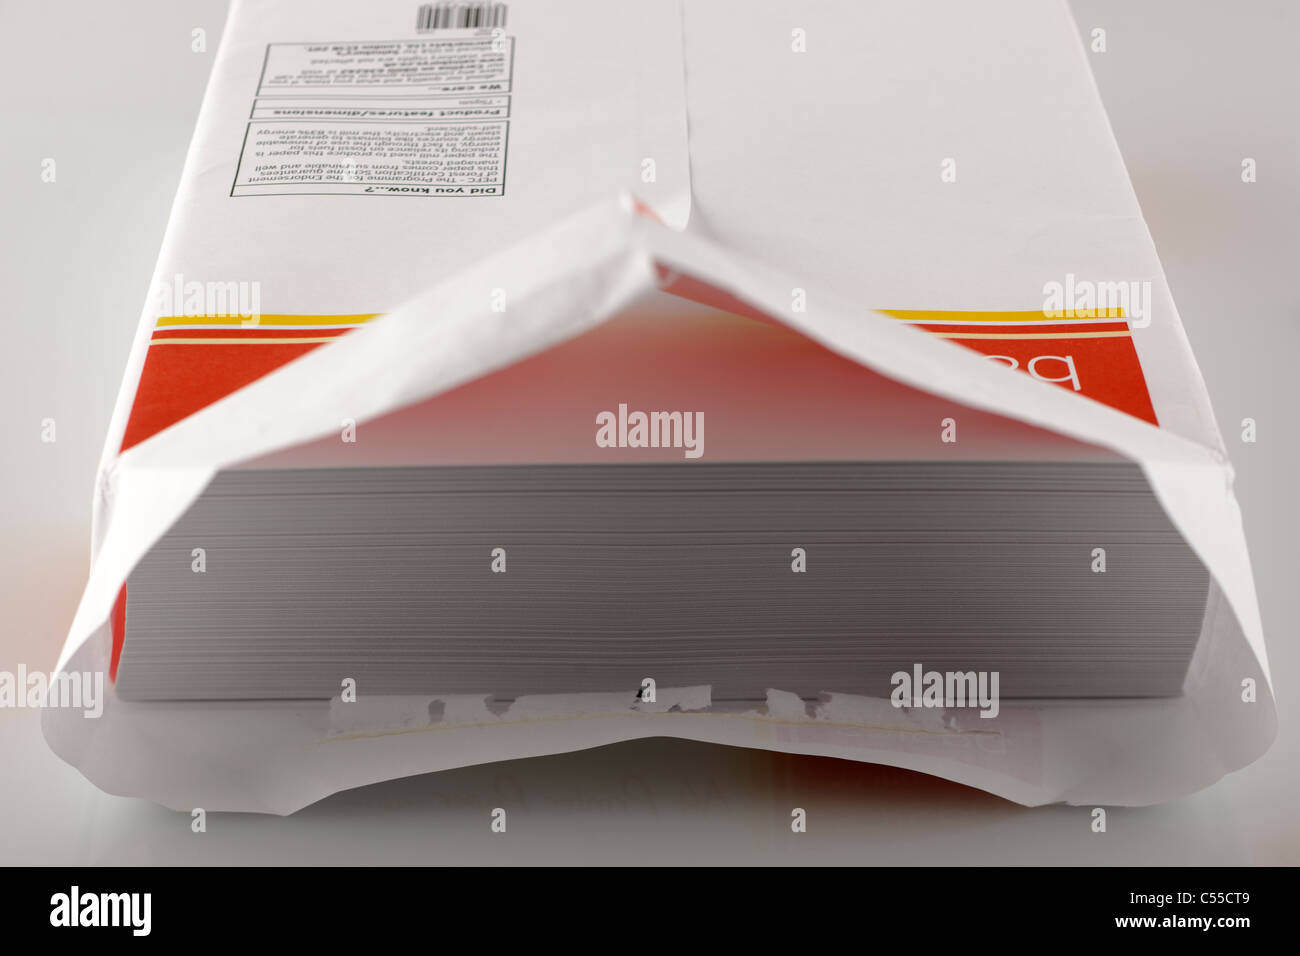 500 A4 sheets of Sainsburys basics white printer paper Stock Photo